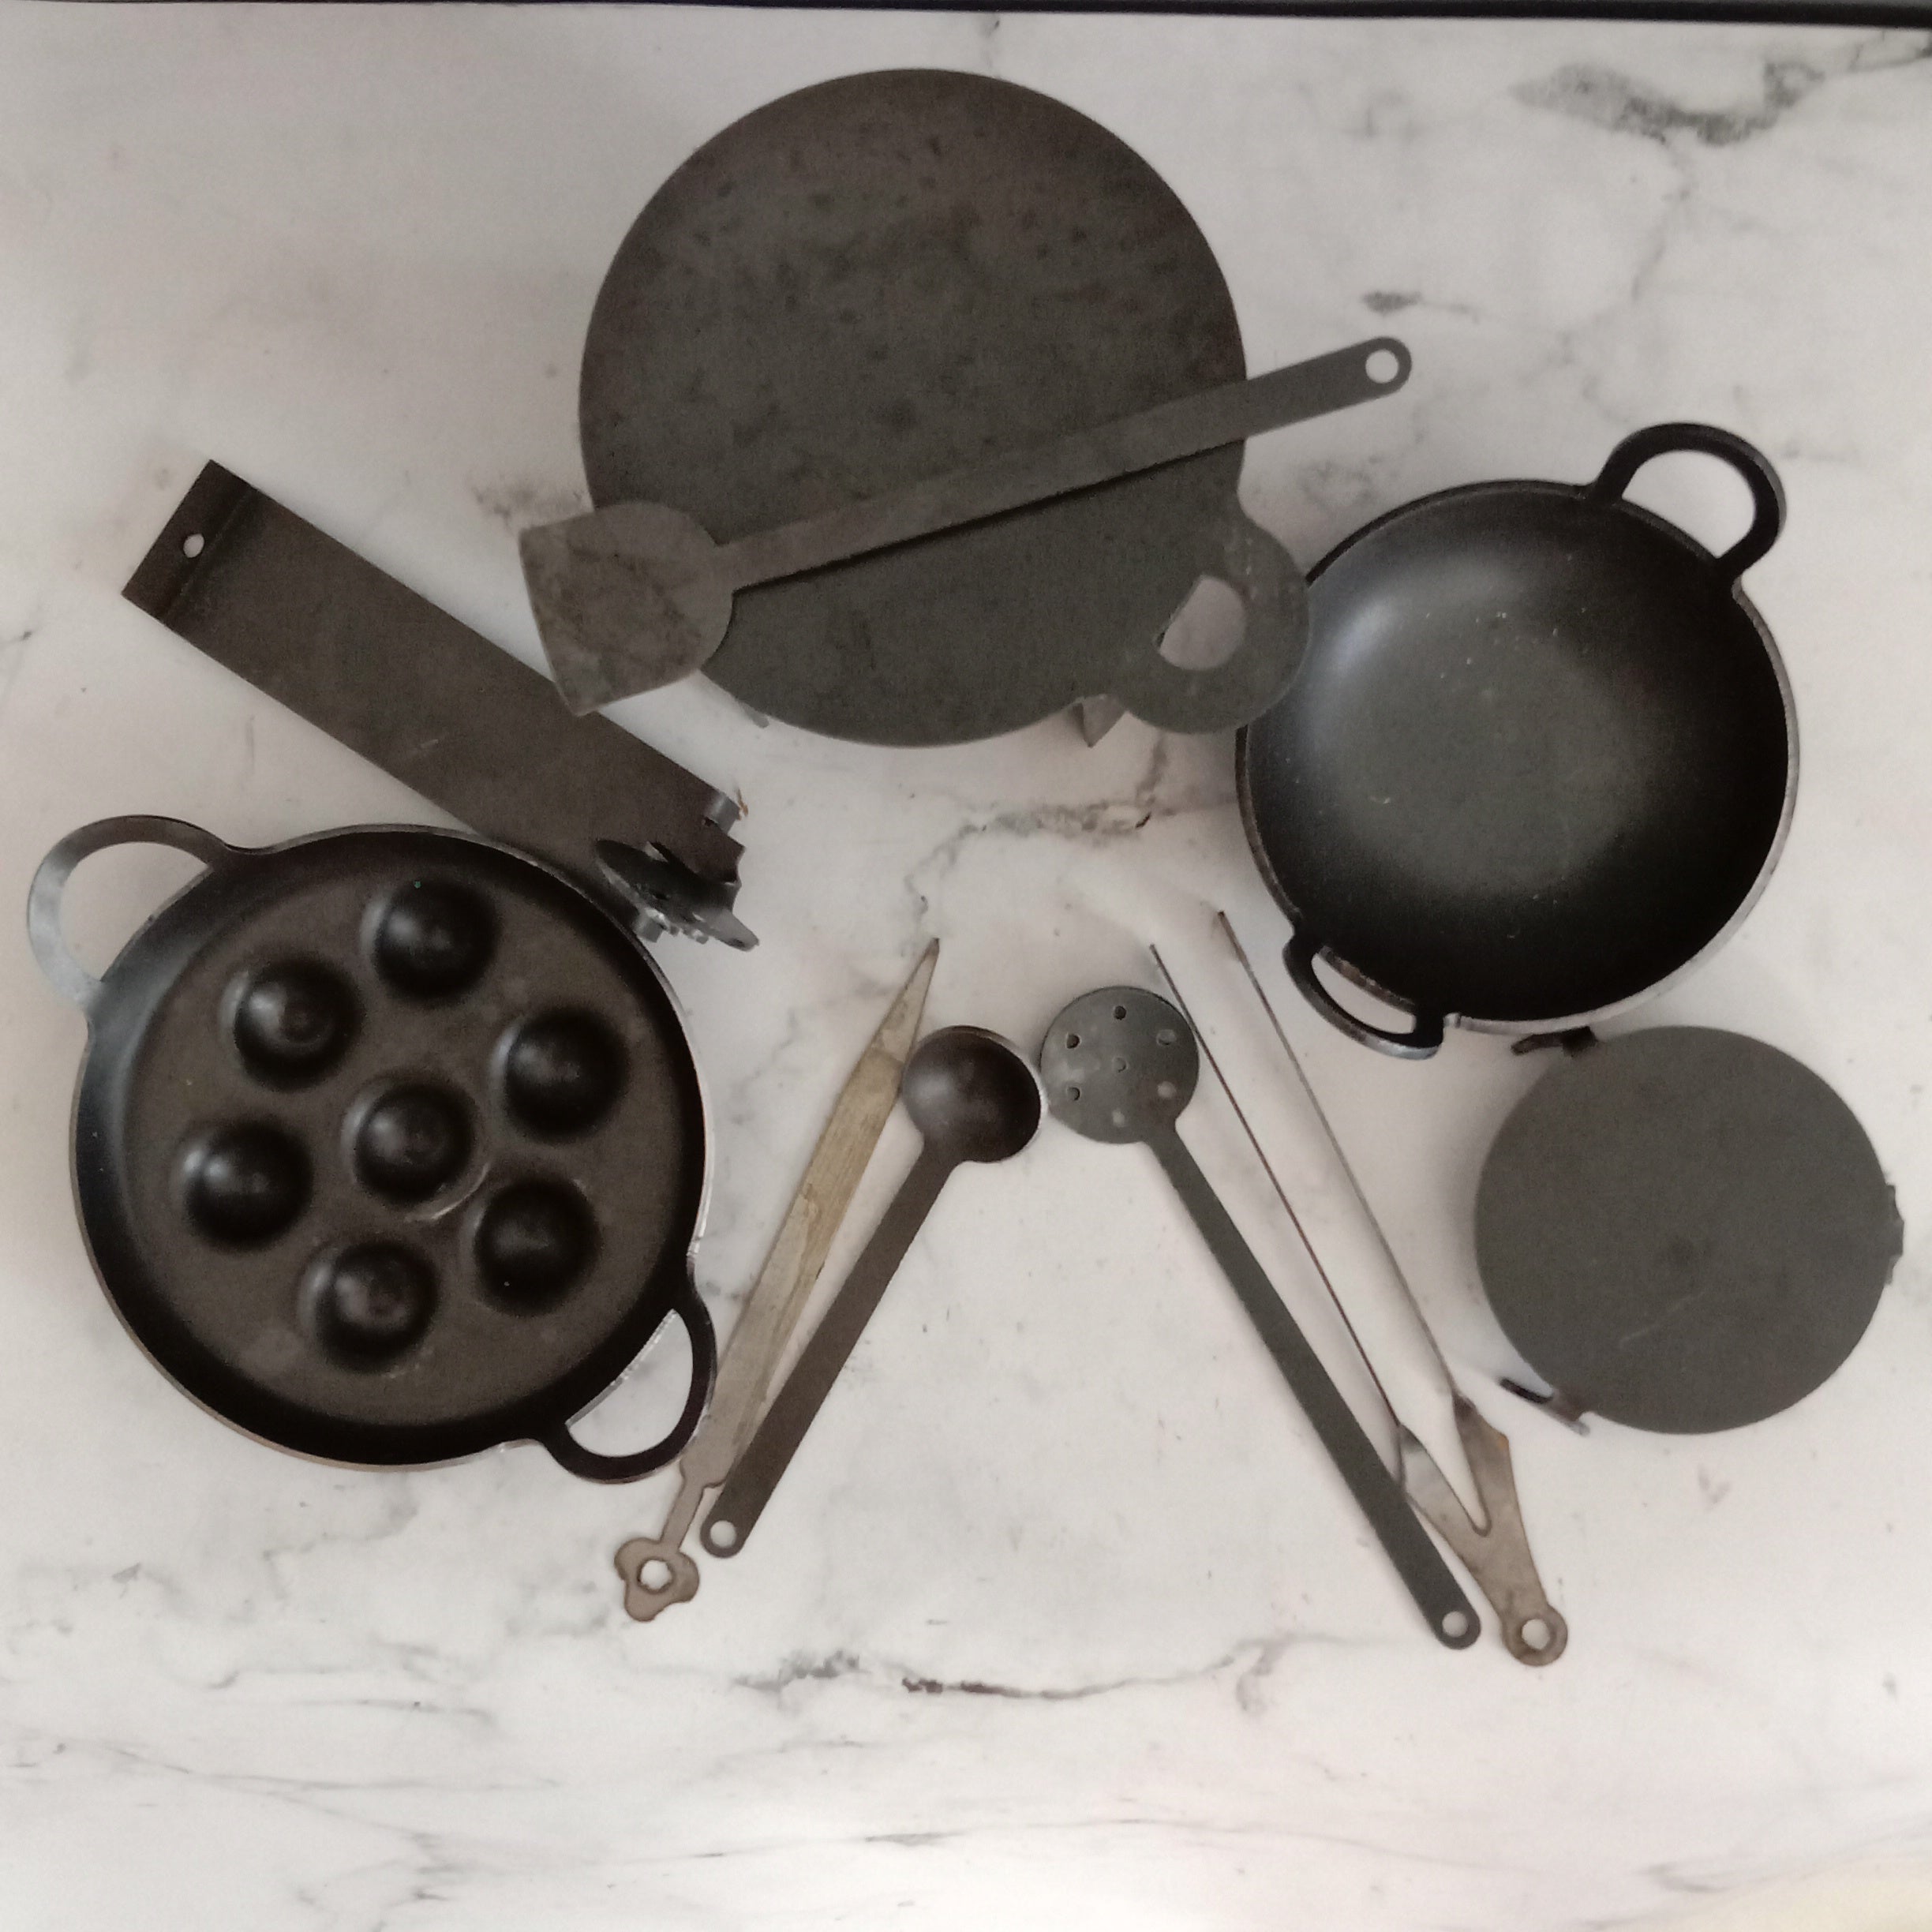 Iron Miniature Cooking Set - Medium